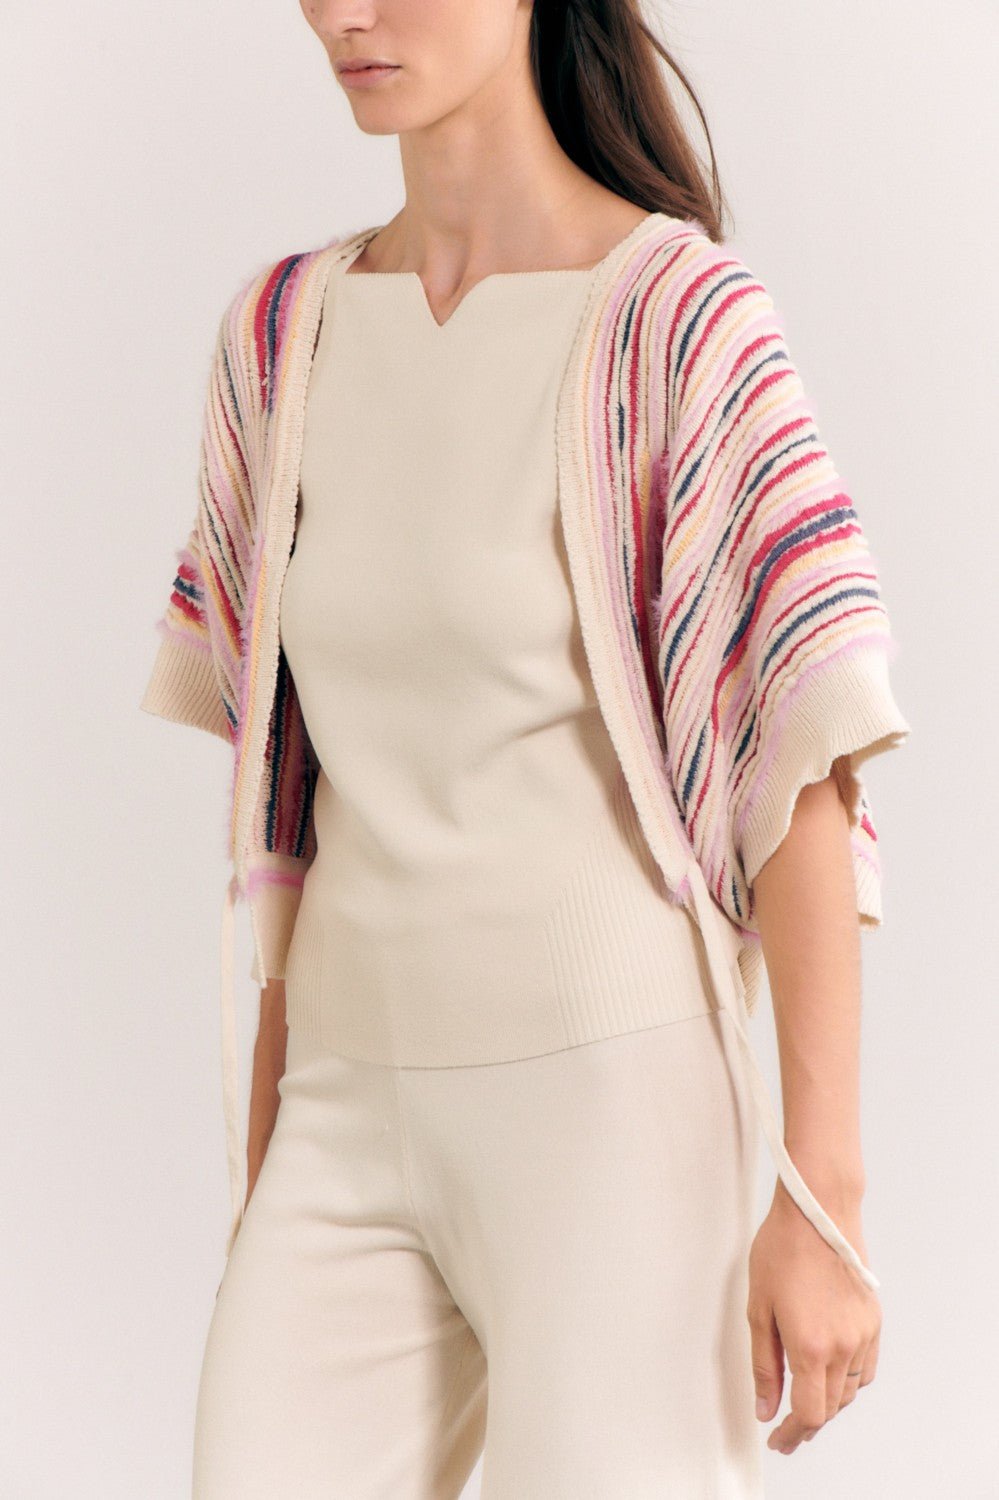 Sita Murt - Knitted Stripe Waistcoat: Multi - Shorely Chic Boutique